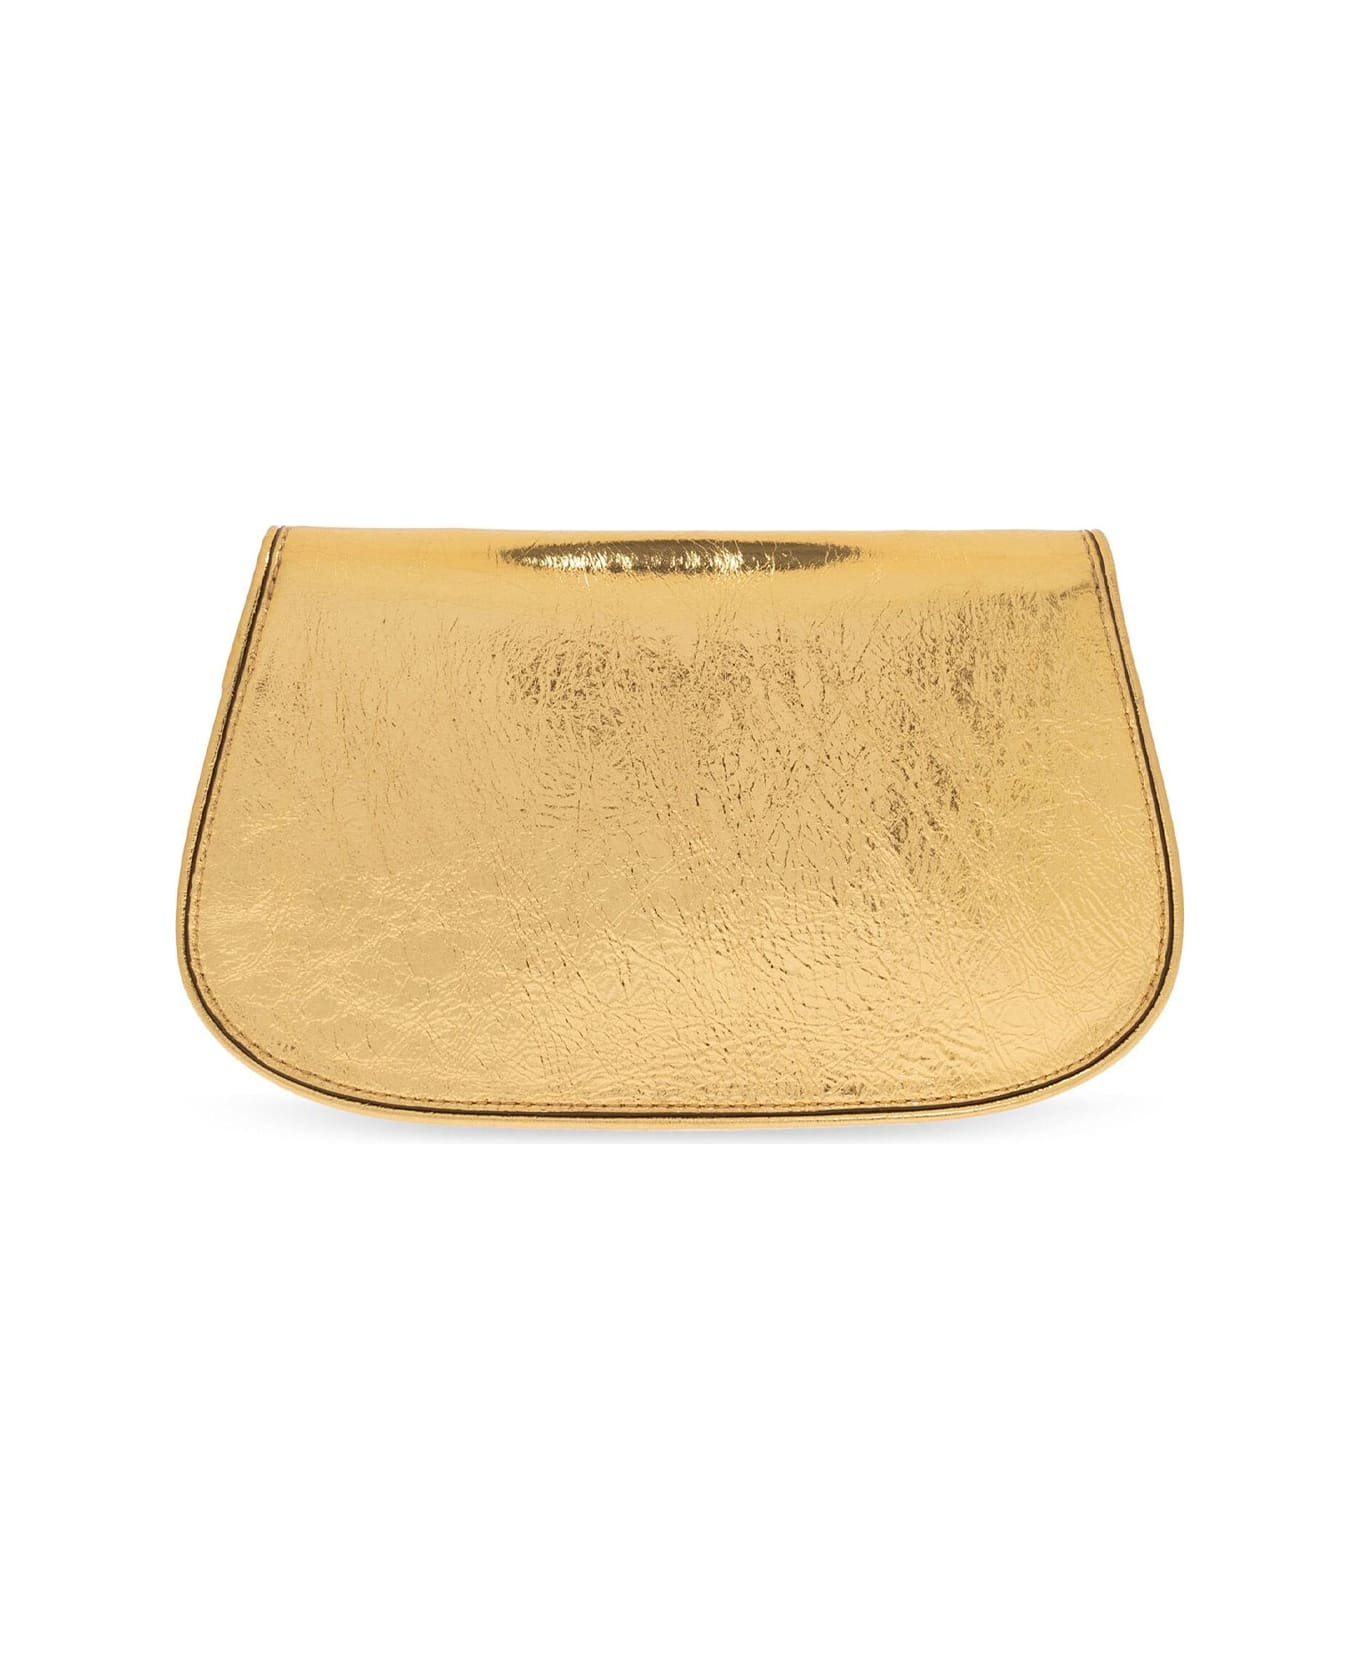 Tory Burch Shoulder Bag - Gold トートバッグ